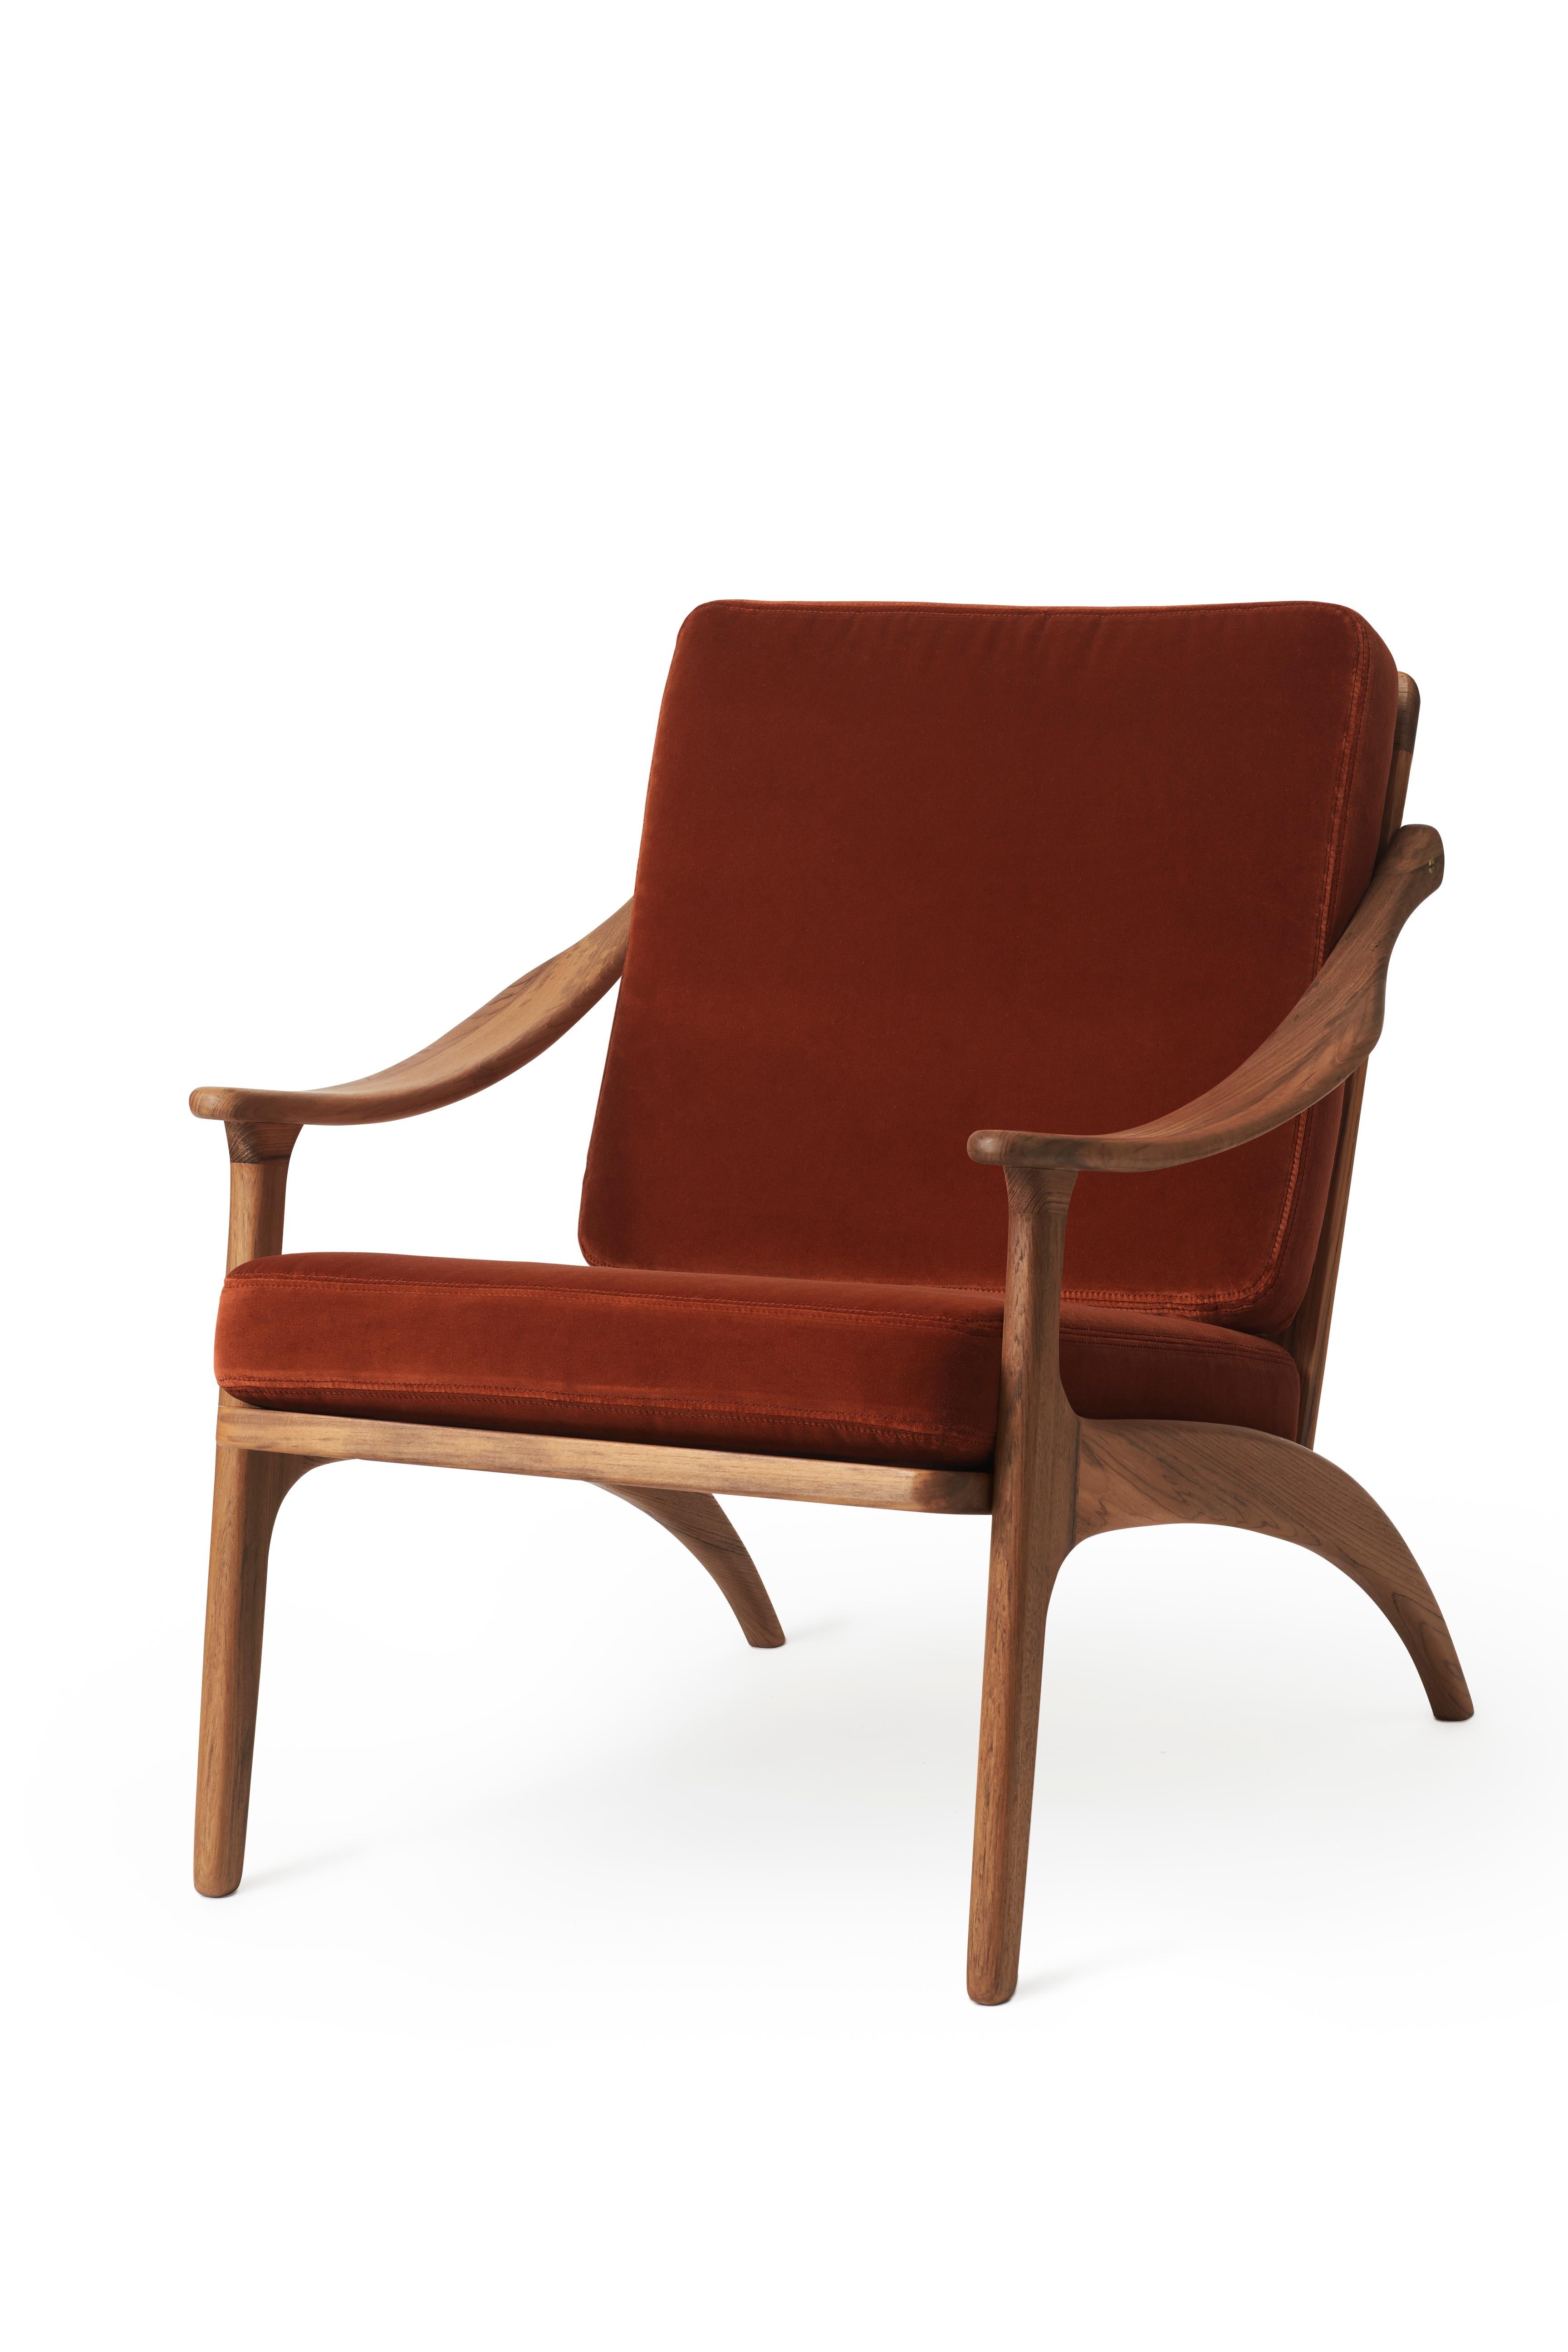 For Sale: Red (Ritz 3701) Lean Back Monochrome Lounge Chair in Teak, by Arne Hovmand-Olsen from Warm